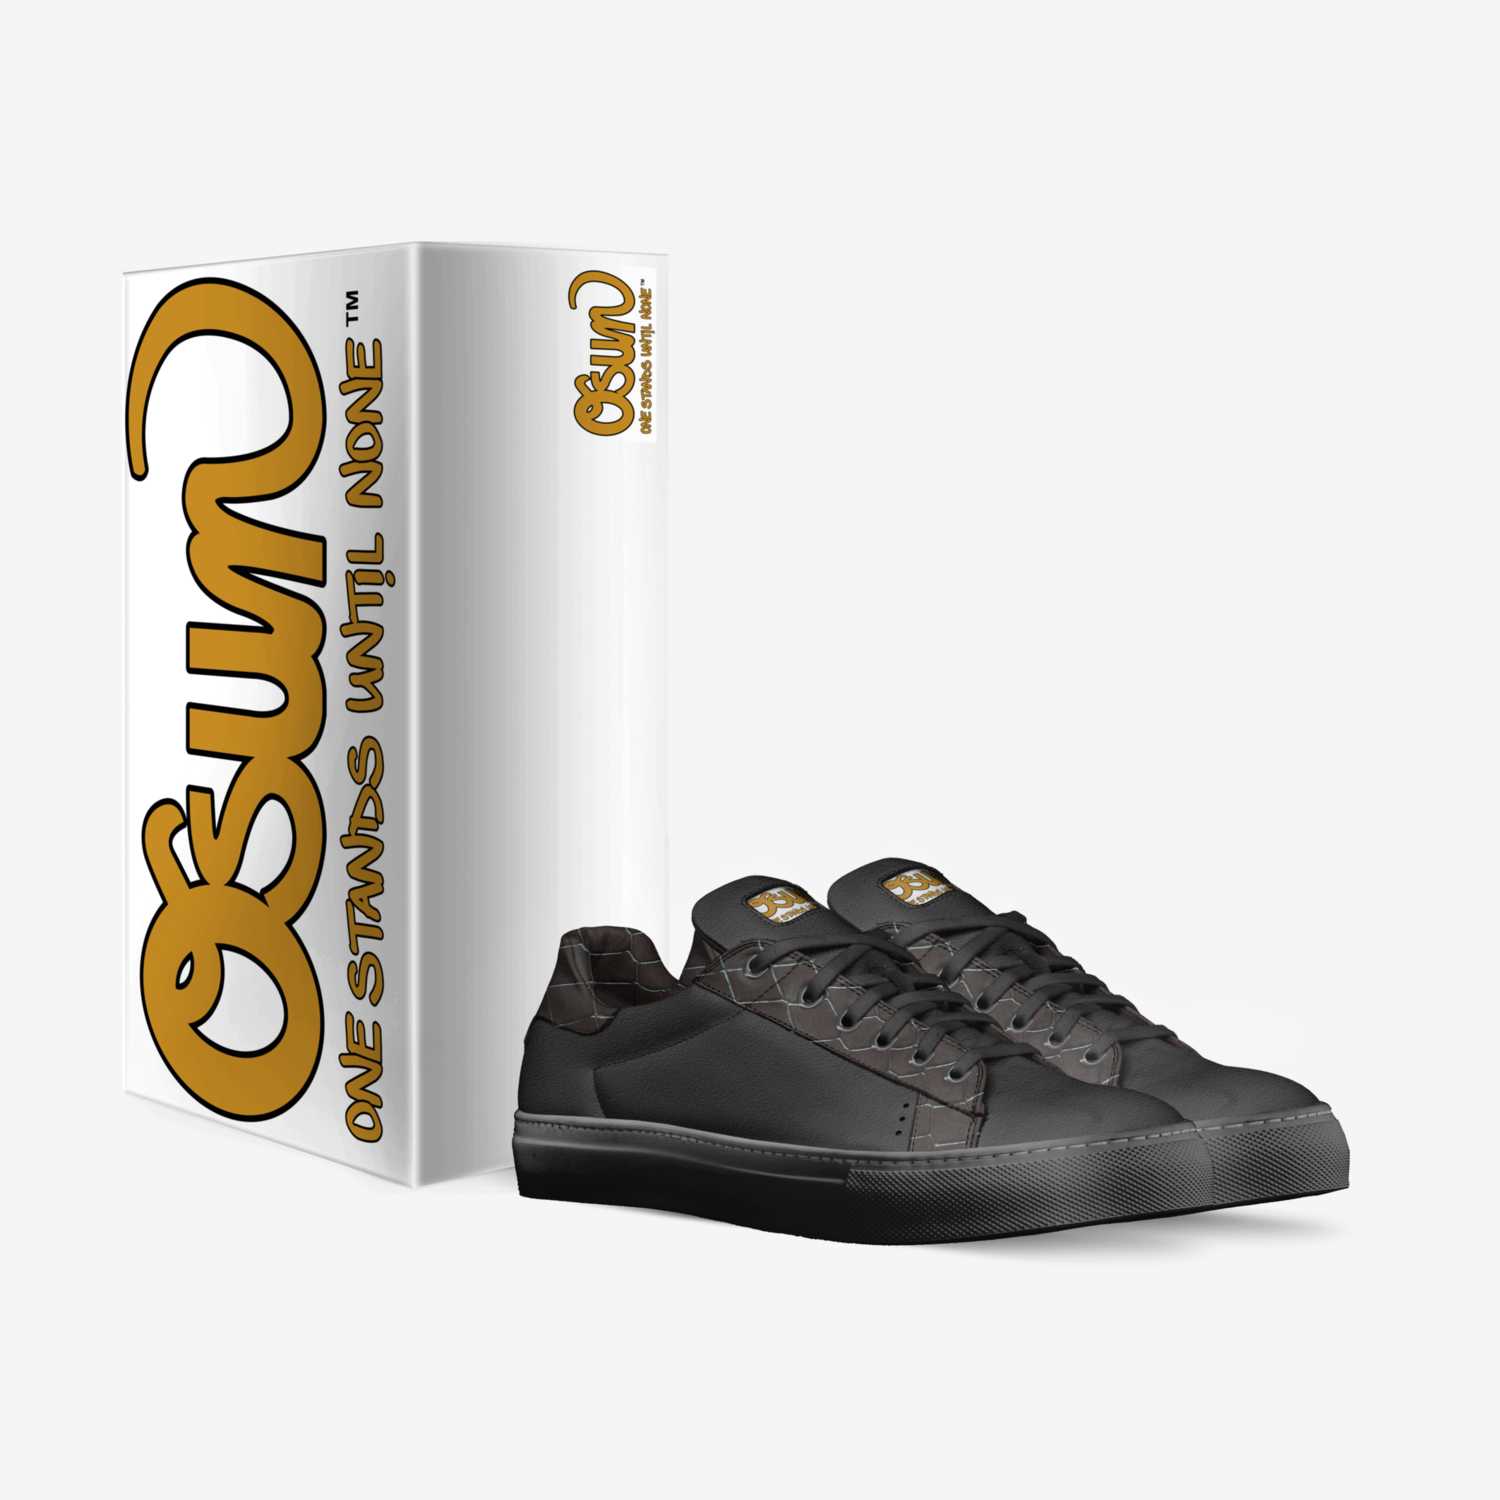 CornballFresh custom made in Italy shoes by Leonty Danzie | Box view